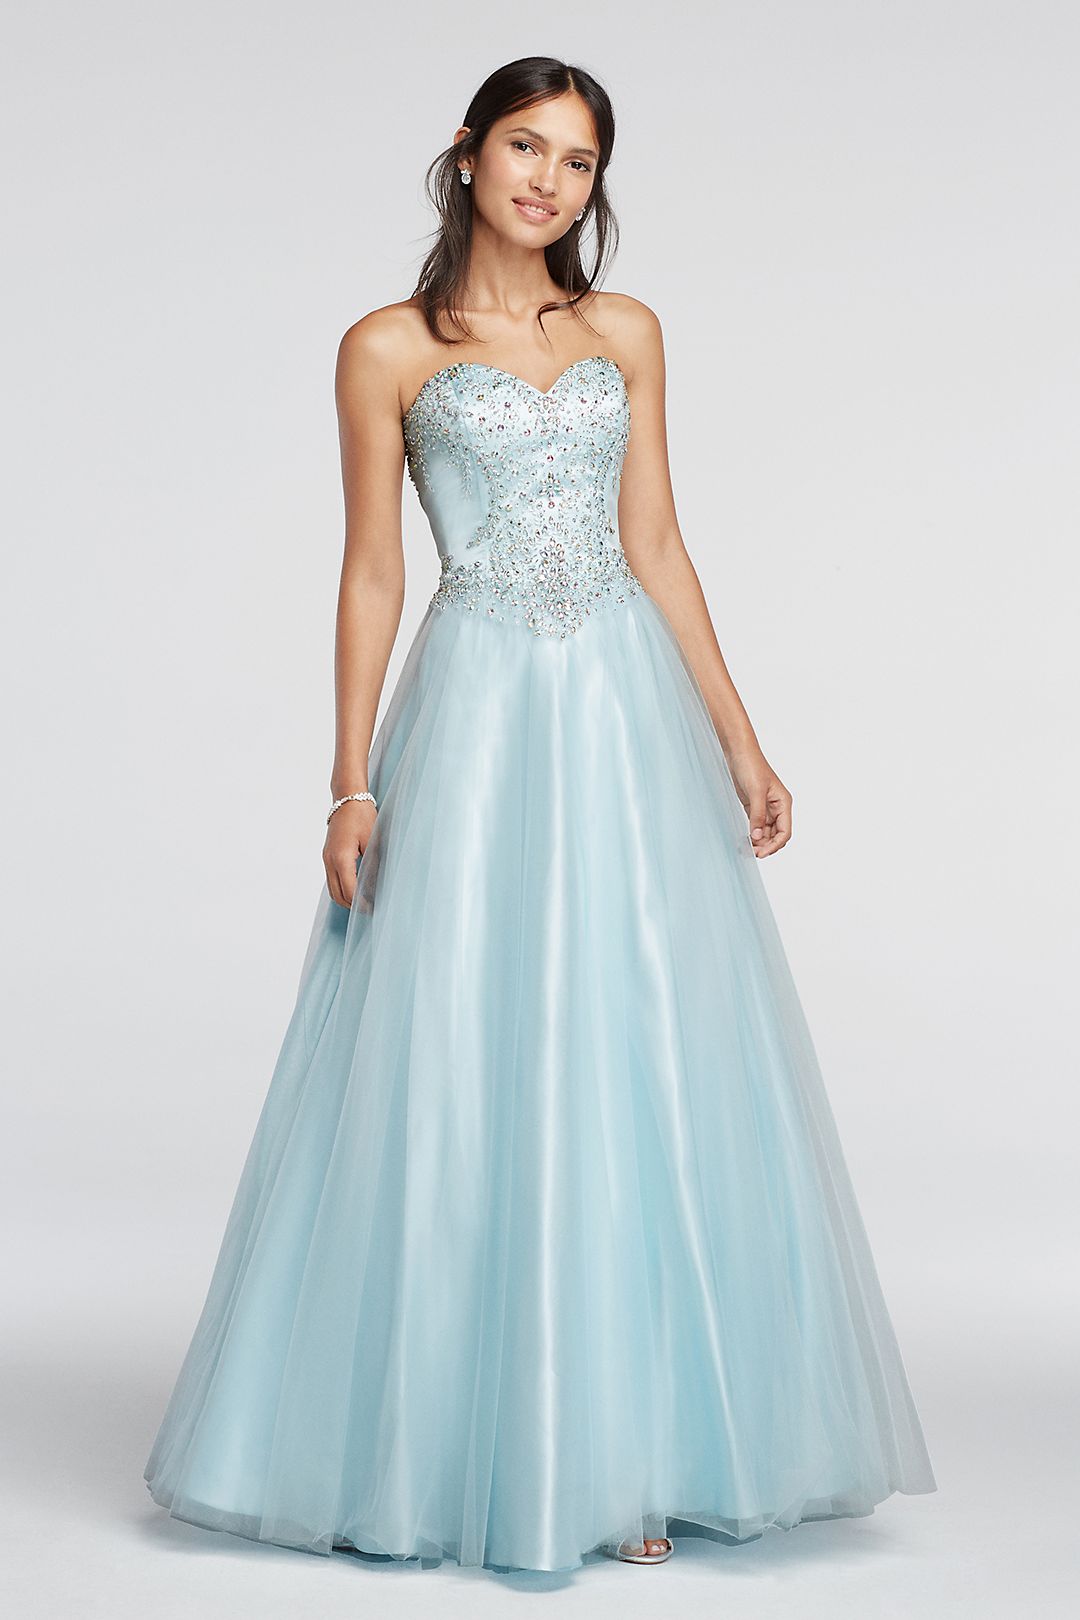 Beautiful crystal embellished prom dress. Size 2